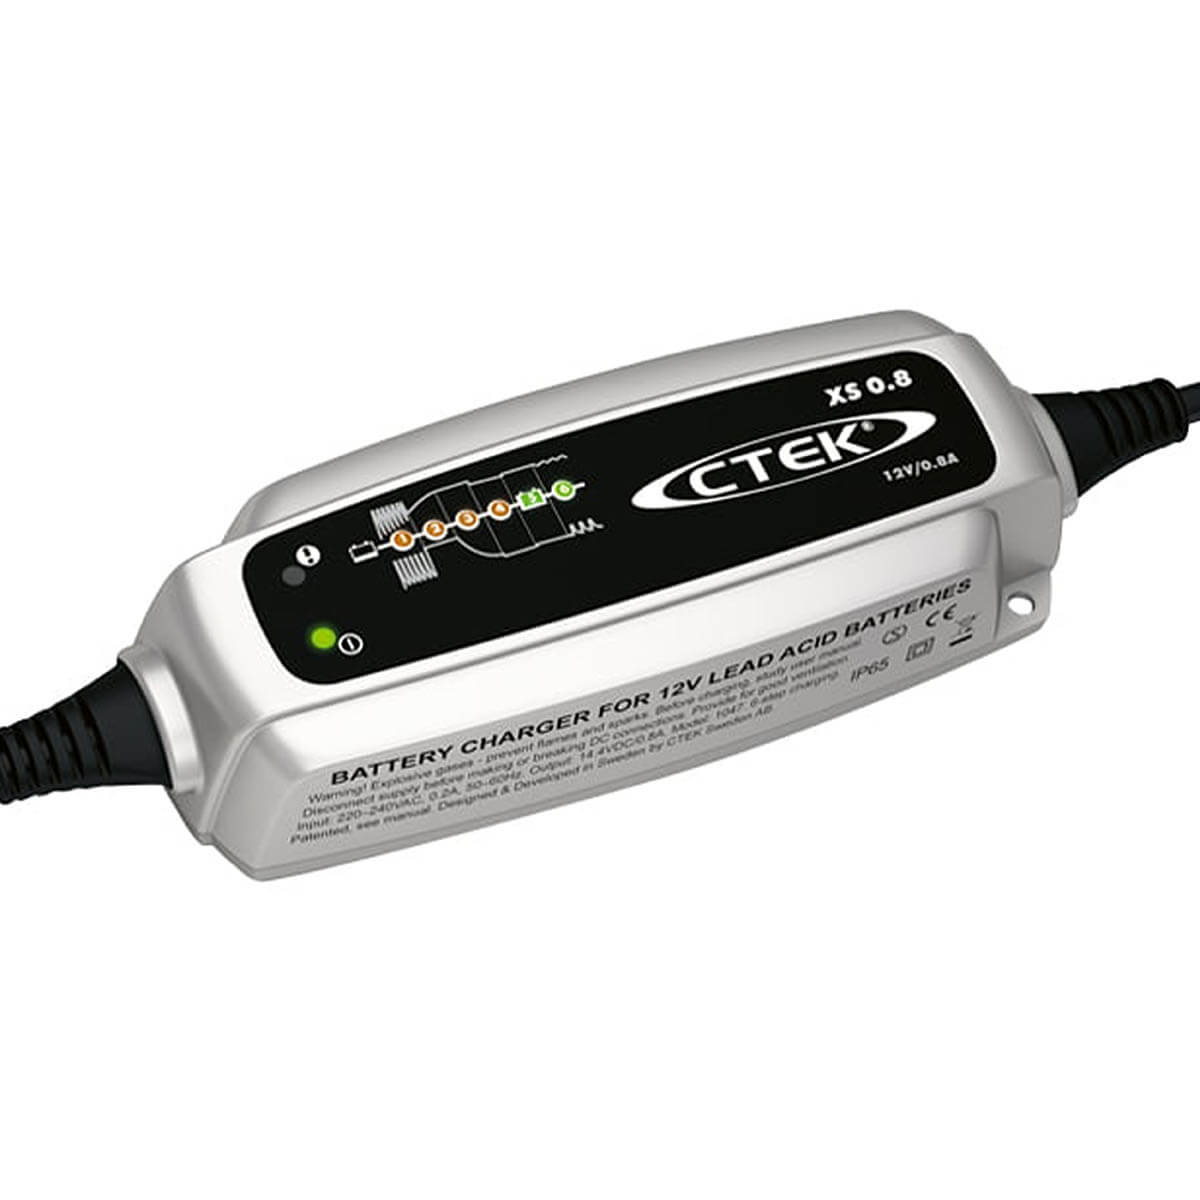 Ctek XS 0.8 Charger 12V 220-240V for Motorcycle Batteries & Smaller Batteries